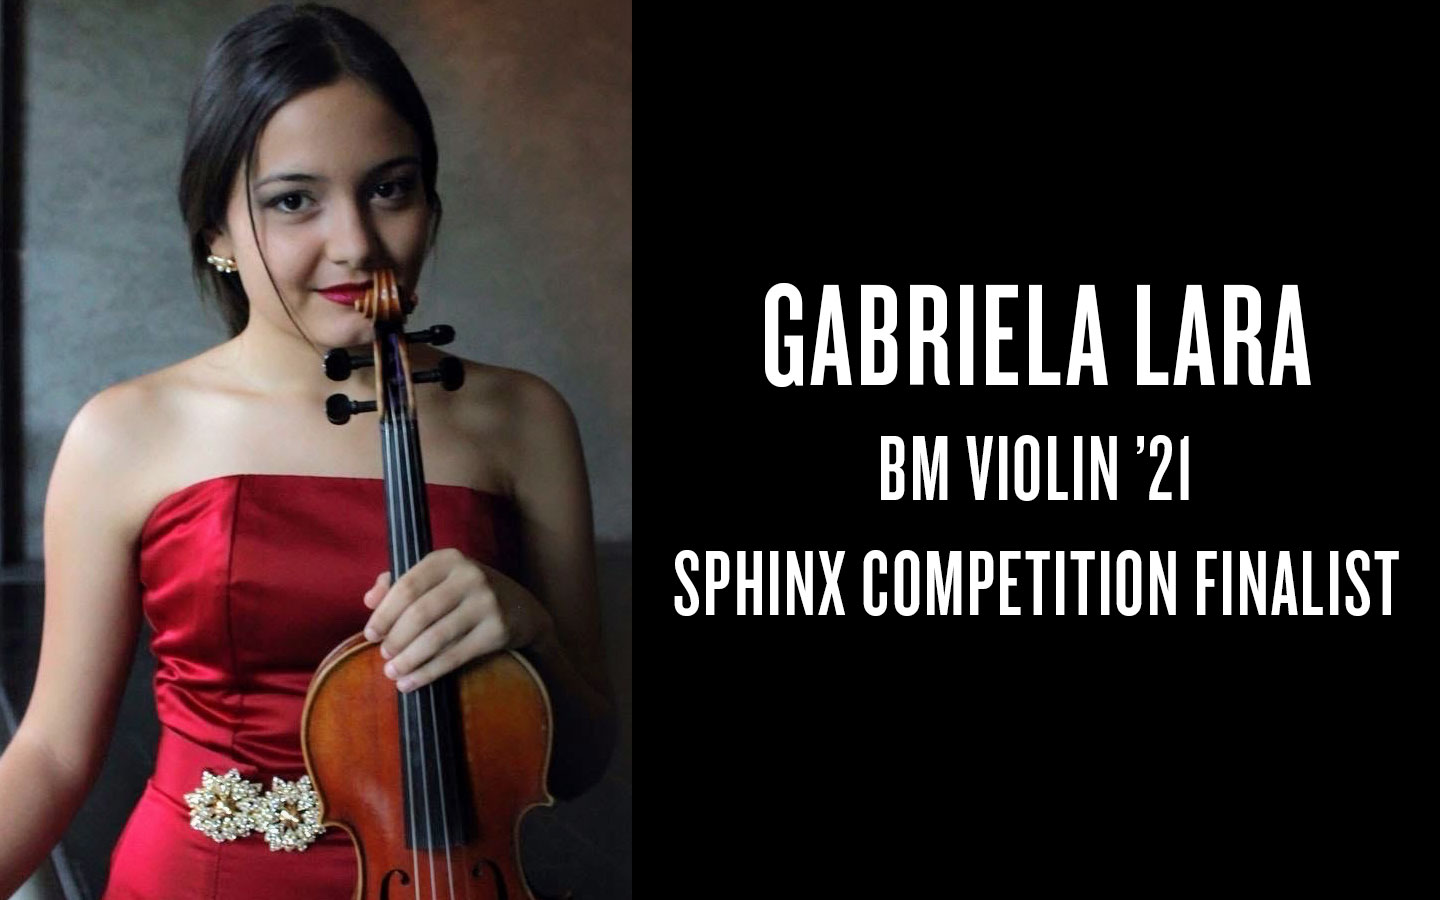 Roosevelt violin performance alum Gabriela Lara